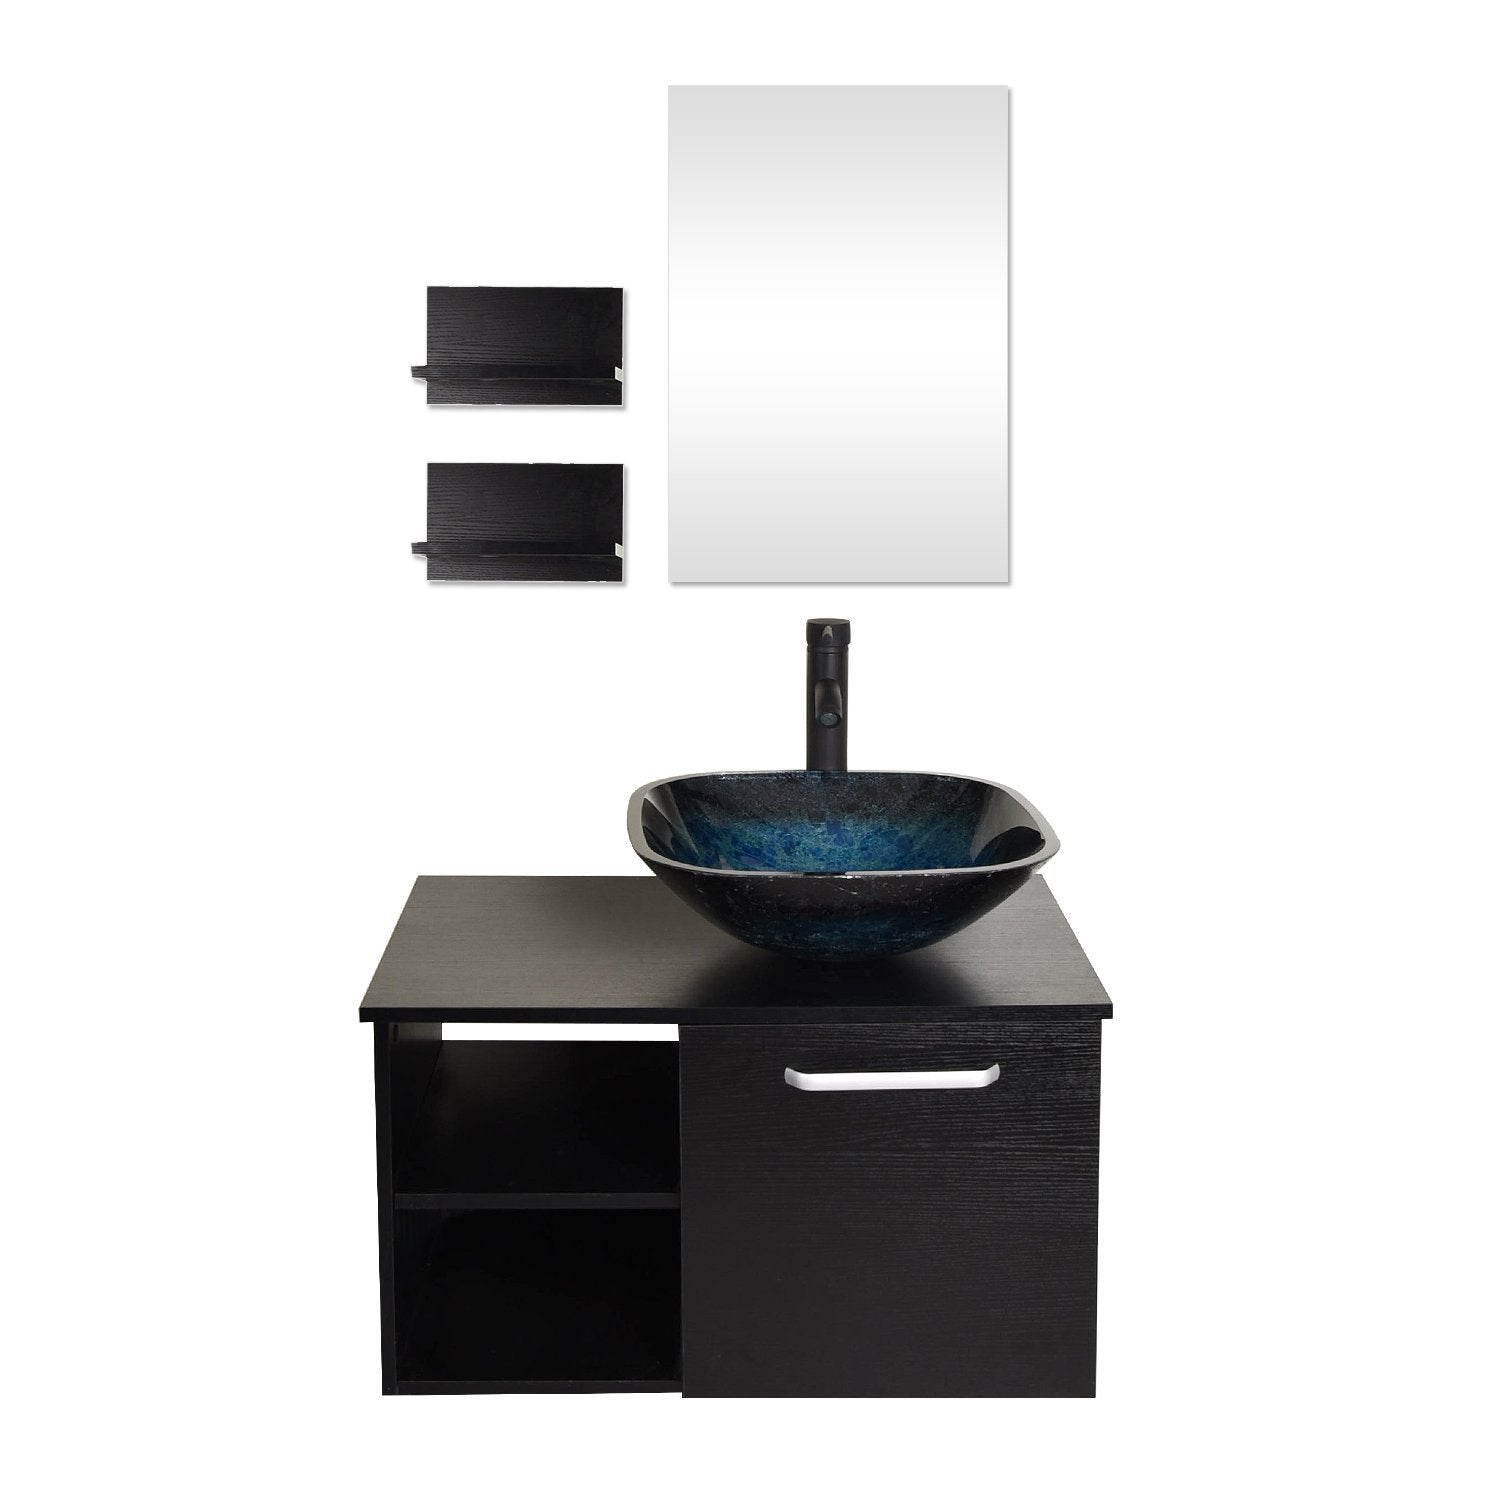 Elecwish 28" Modern Bathroom Vanity, Wall Mounted Cabinet Lavatory Wood Shelf Storage, Satin Nickel, Eco-MDF Dark Espresso (Black) with Mirror (USBA20079&USBA20076)